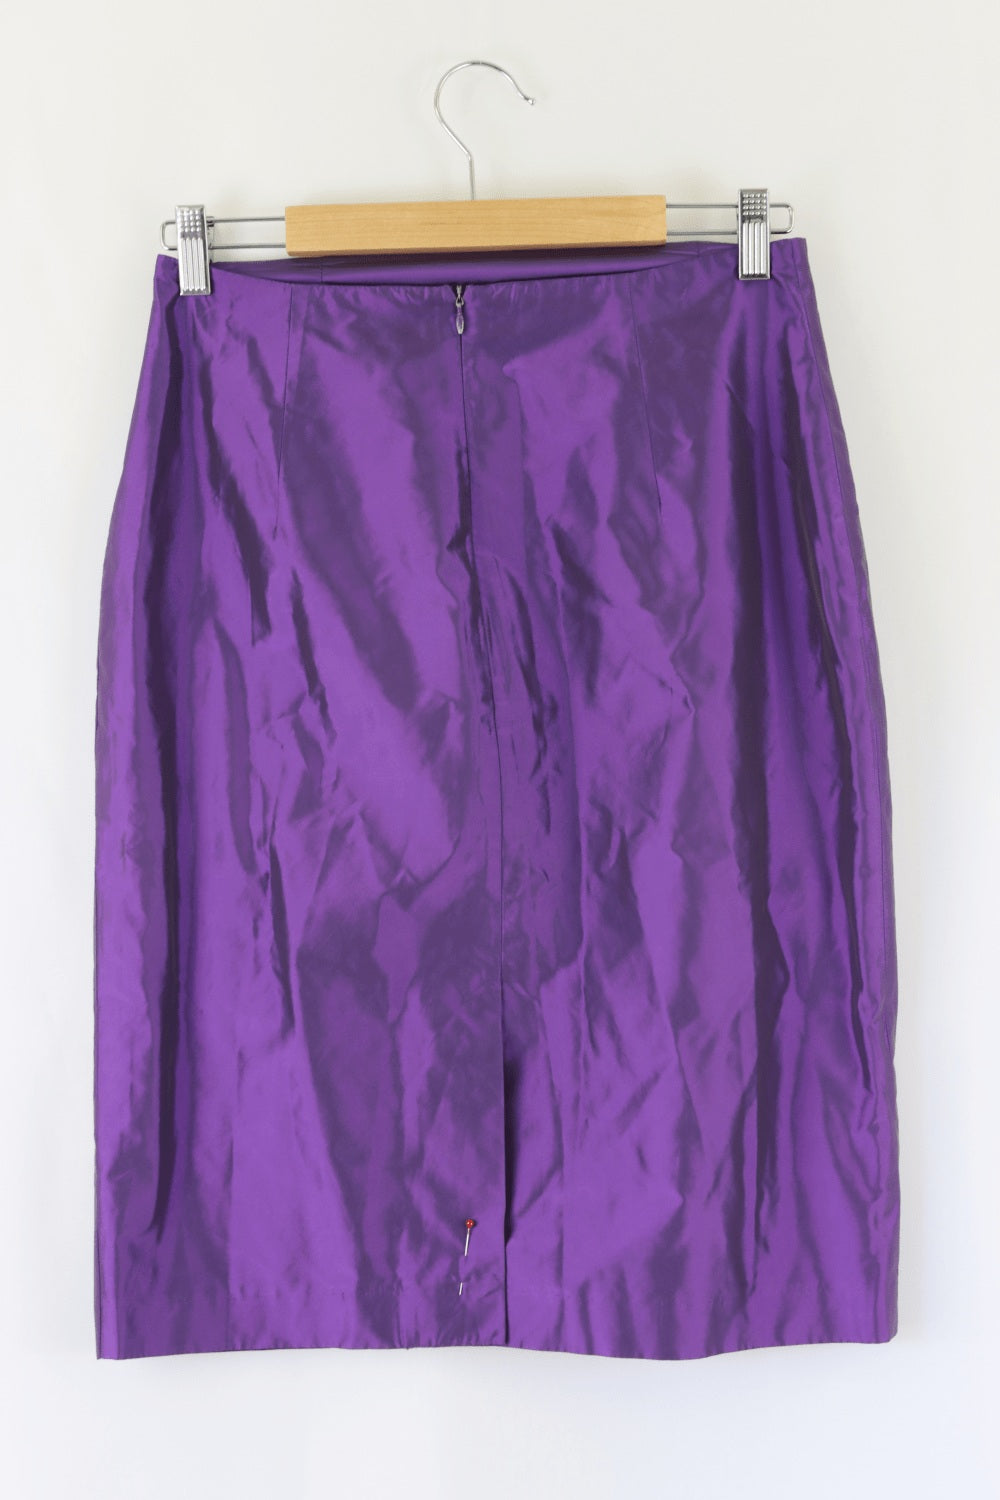 Carla Zampatti Purple Skirt 8